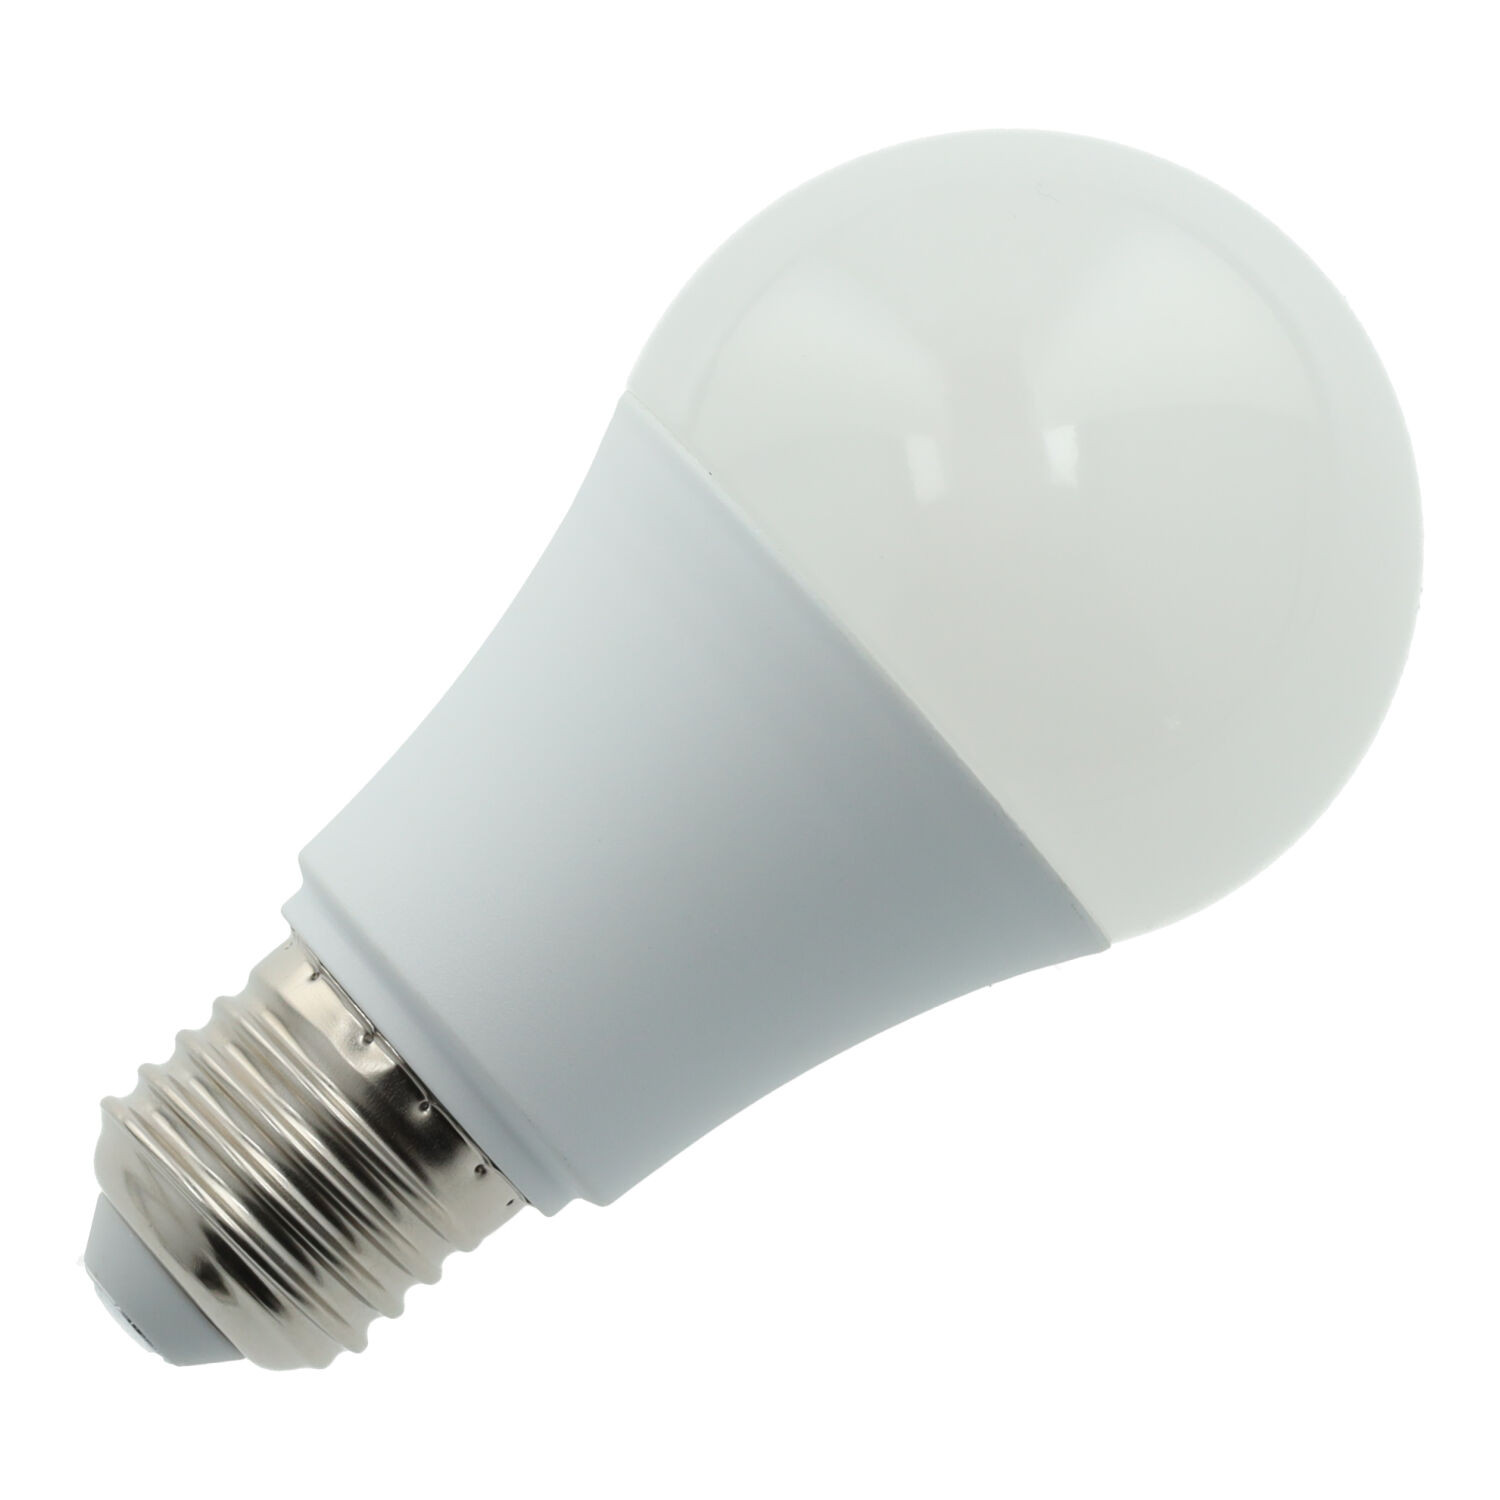 Light Bulb - E27, 12W Dimmable